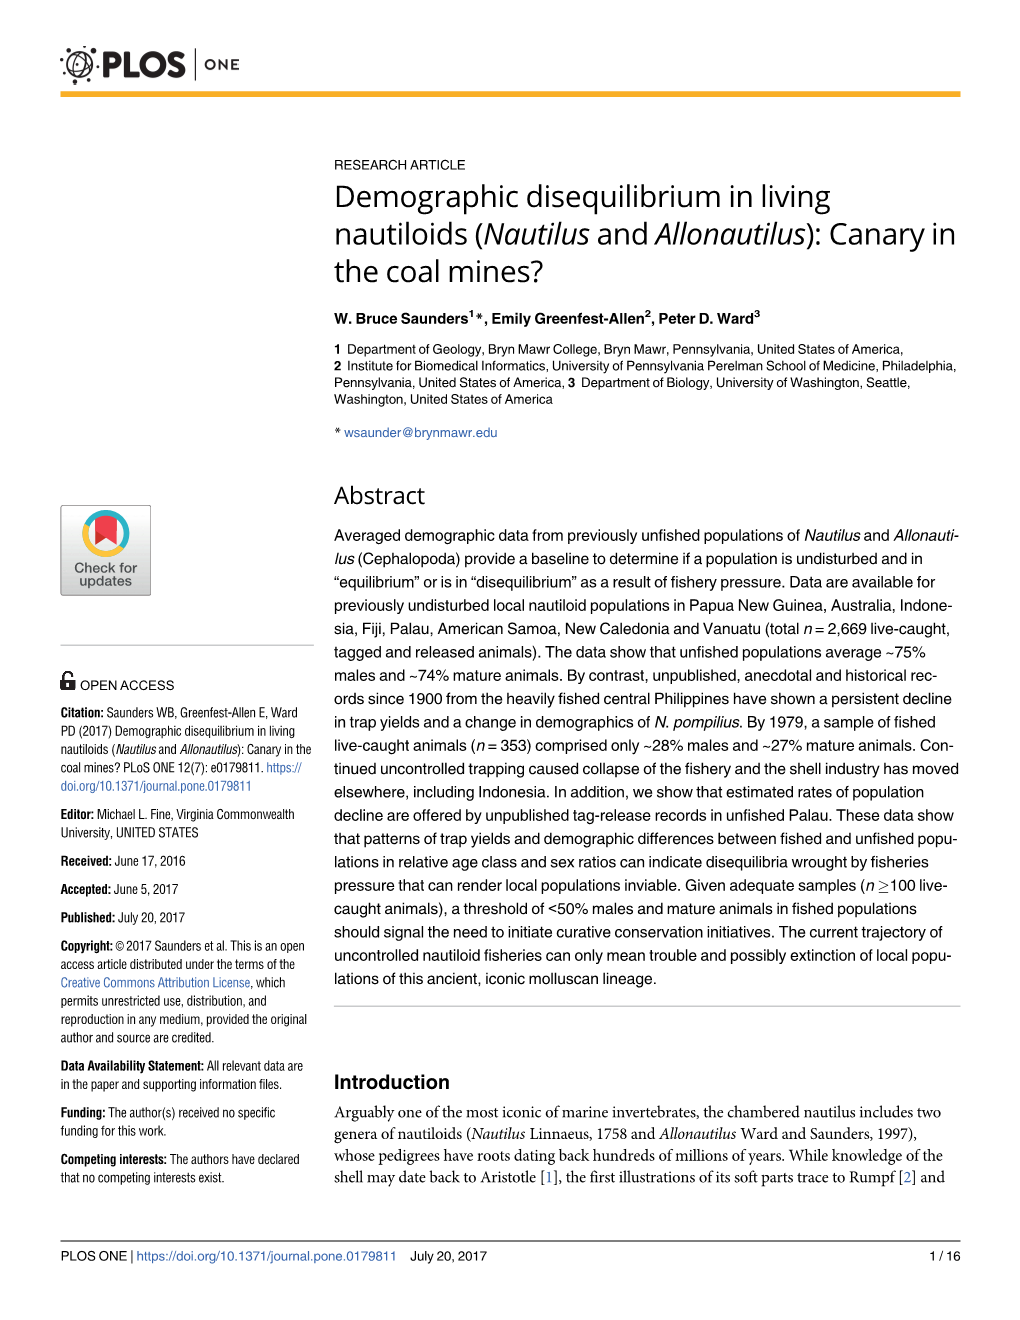 Demographic Disequilibrium in Living Nautiloids (Nautilus and Allonautilus): Canary in the Coal Mines?